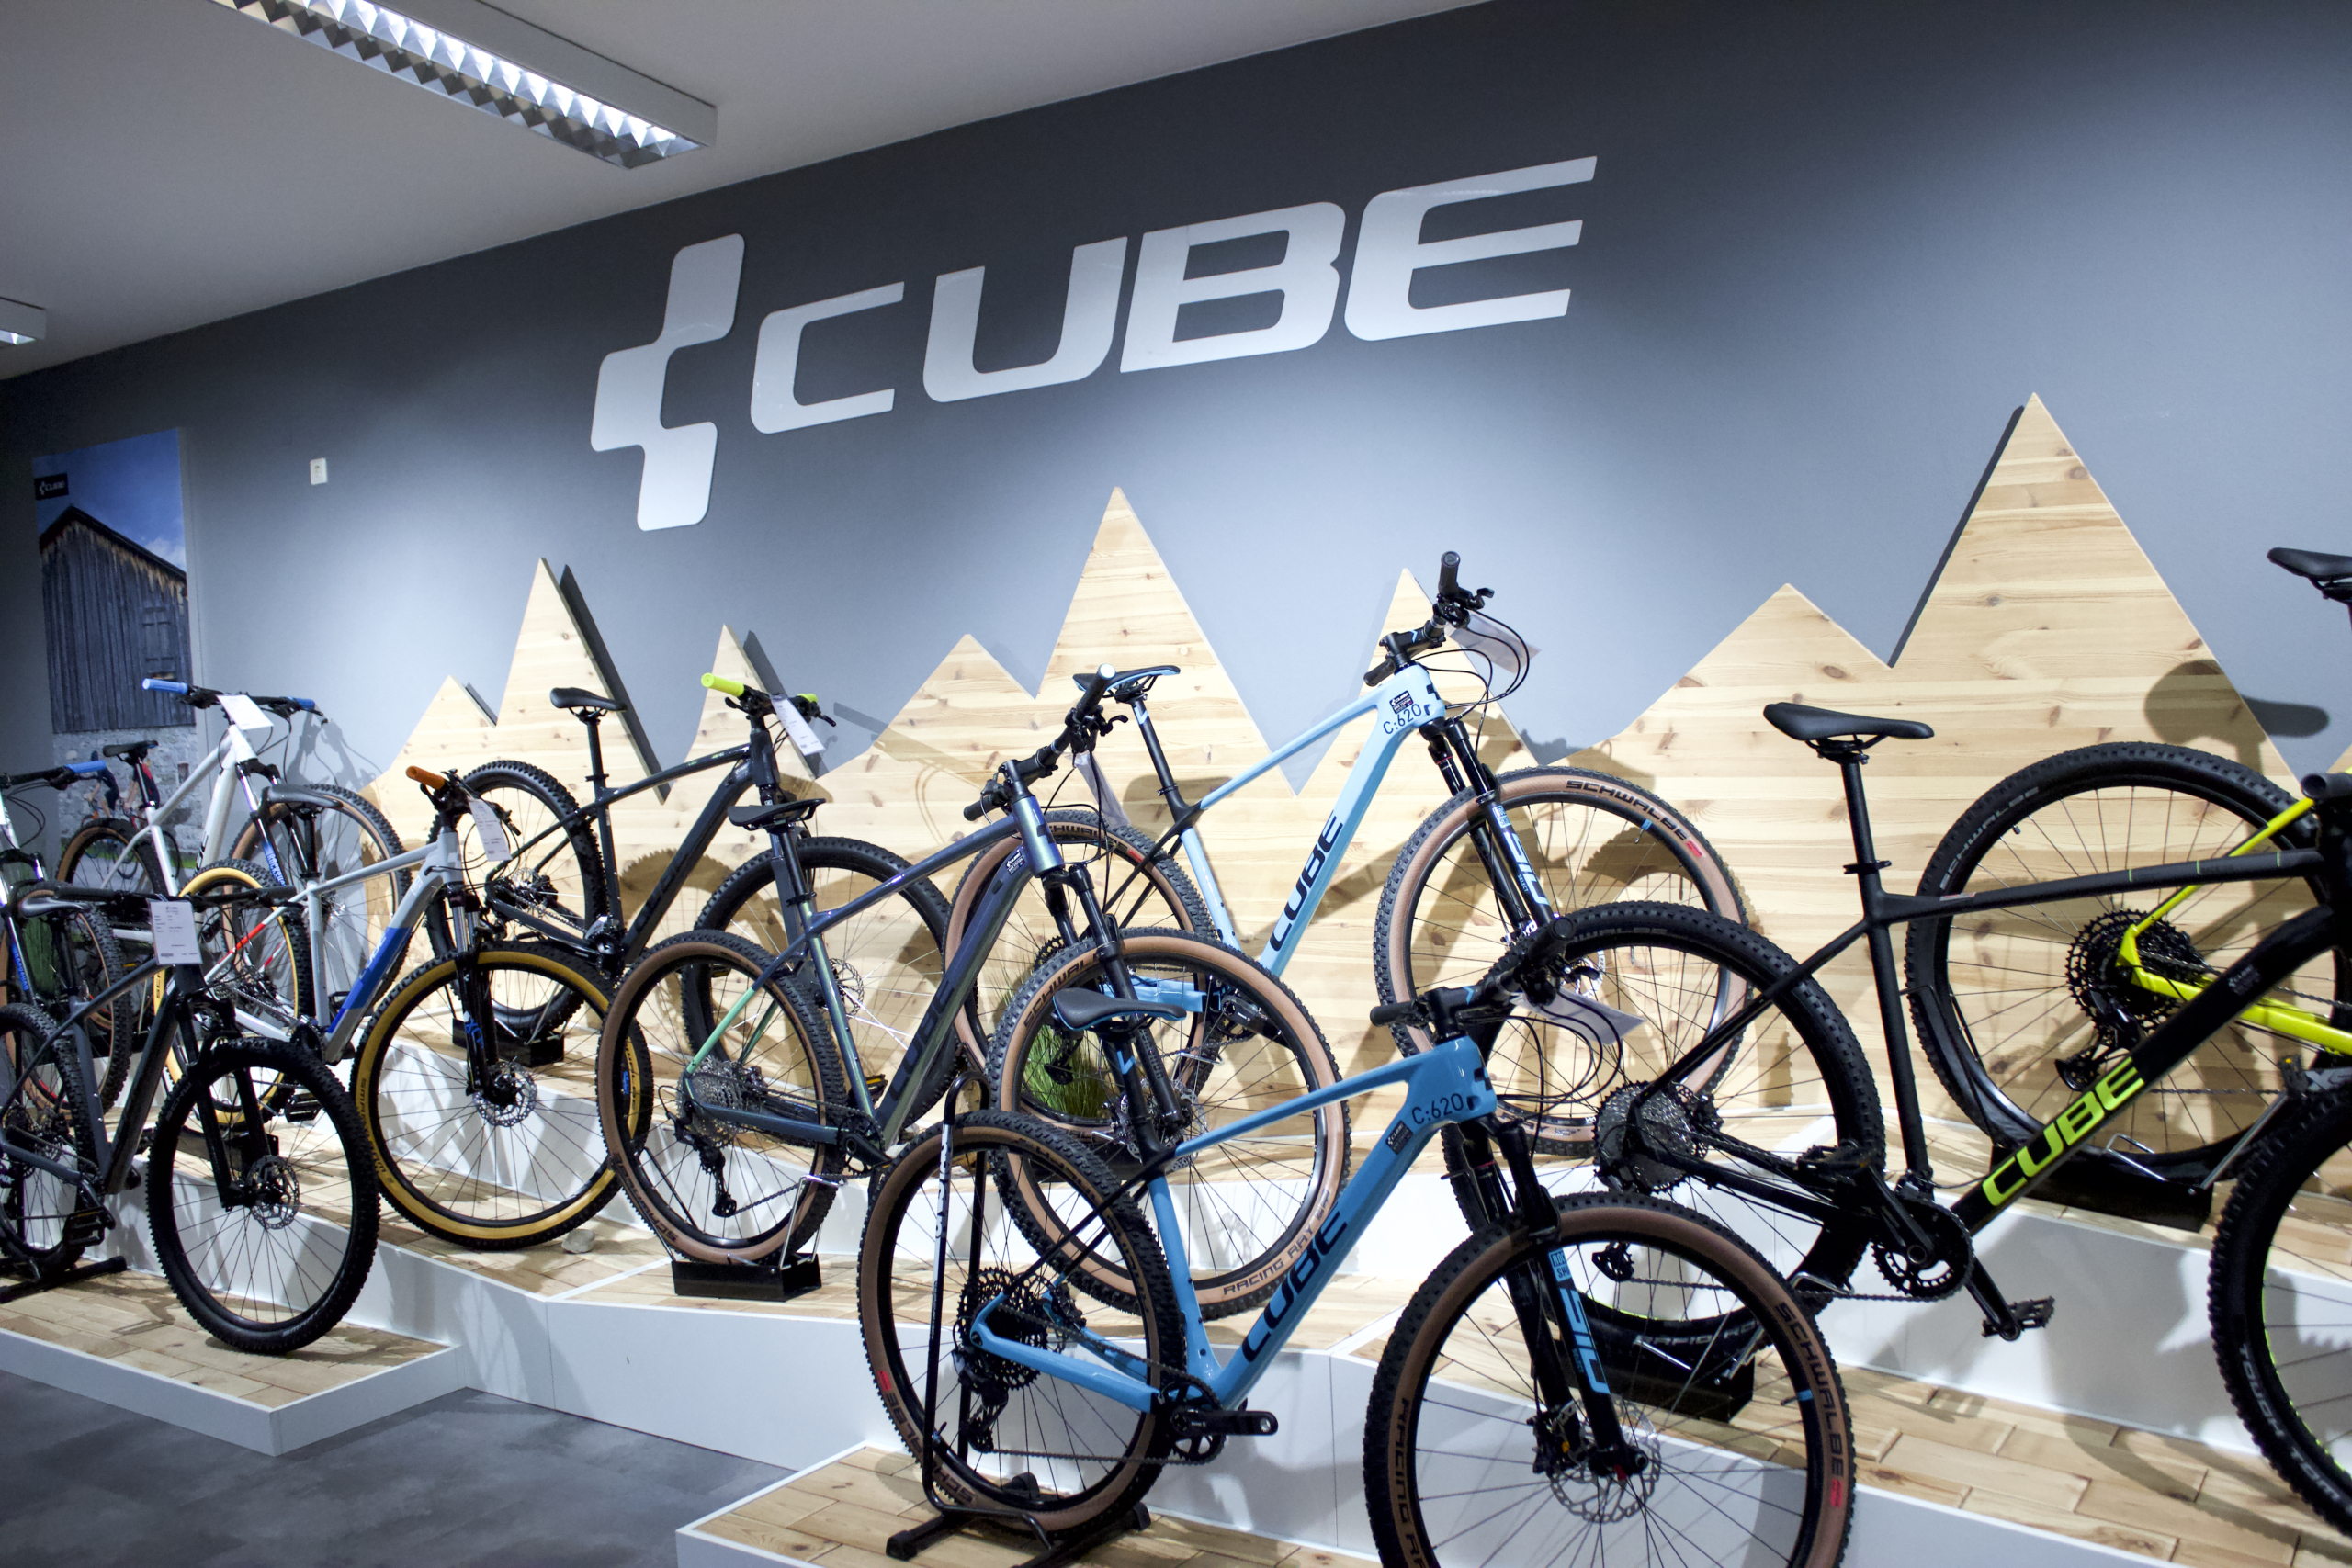 Buy Cube Bikes Online Cheap